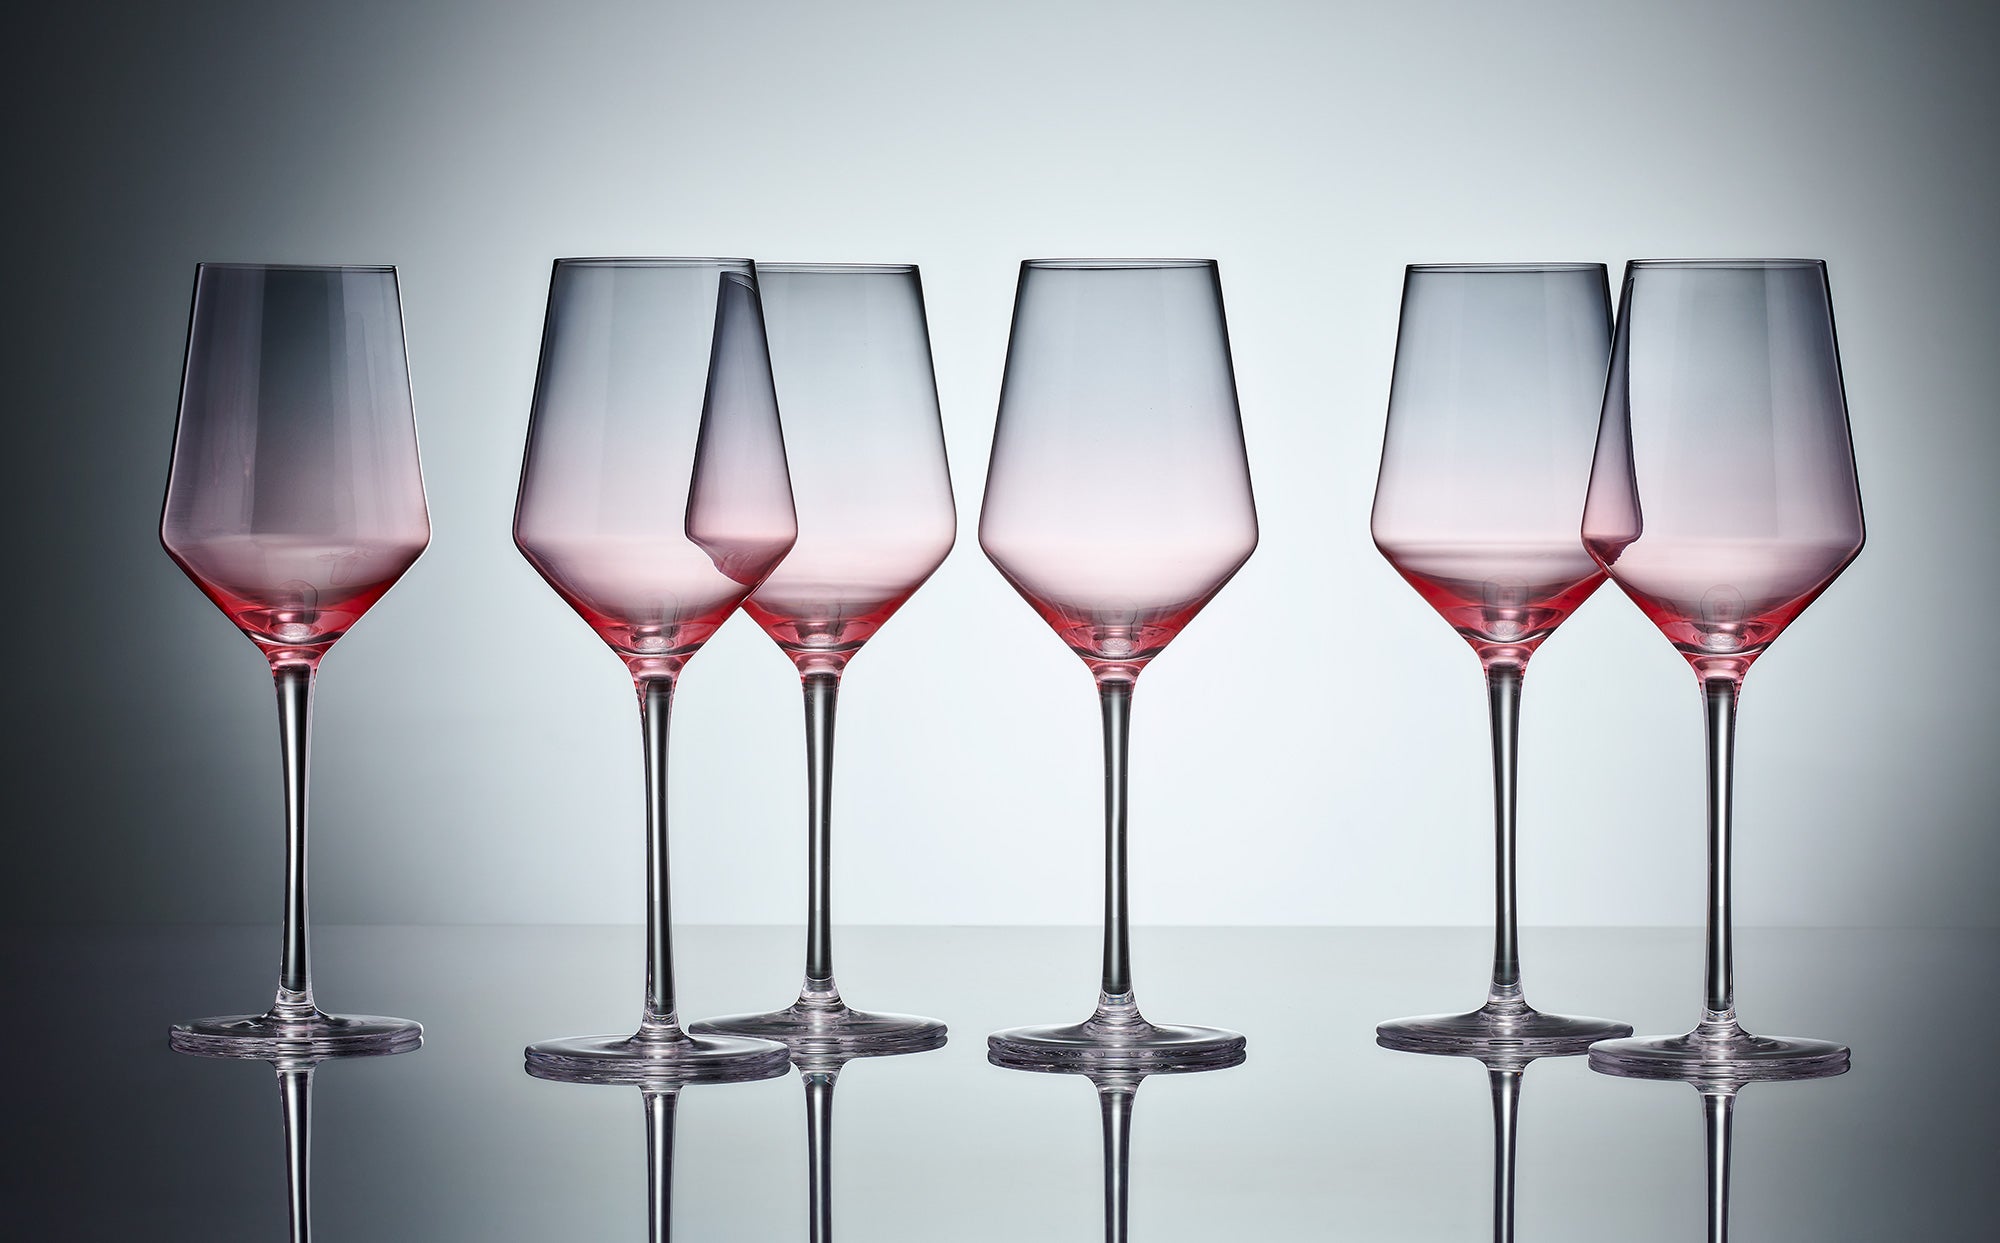 Set of 6 Wine Glasses - Ombre Design - Pink & Grey